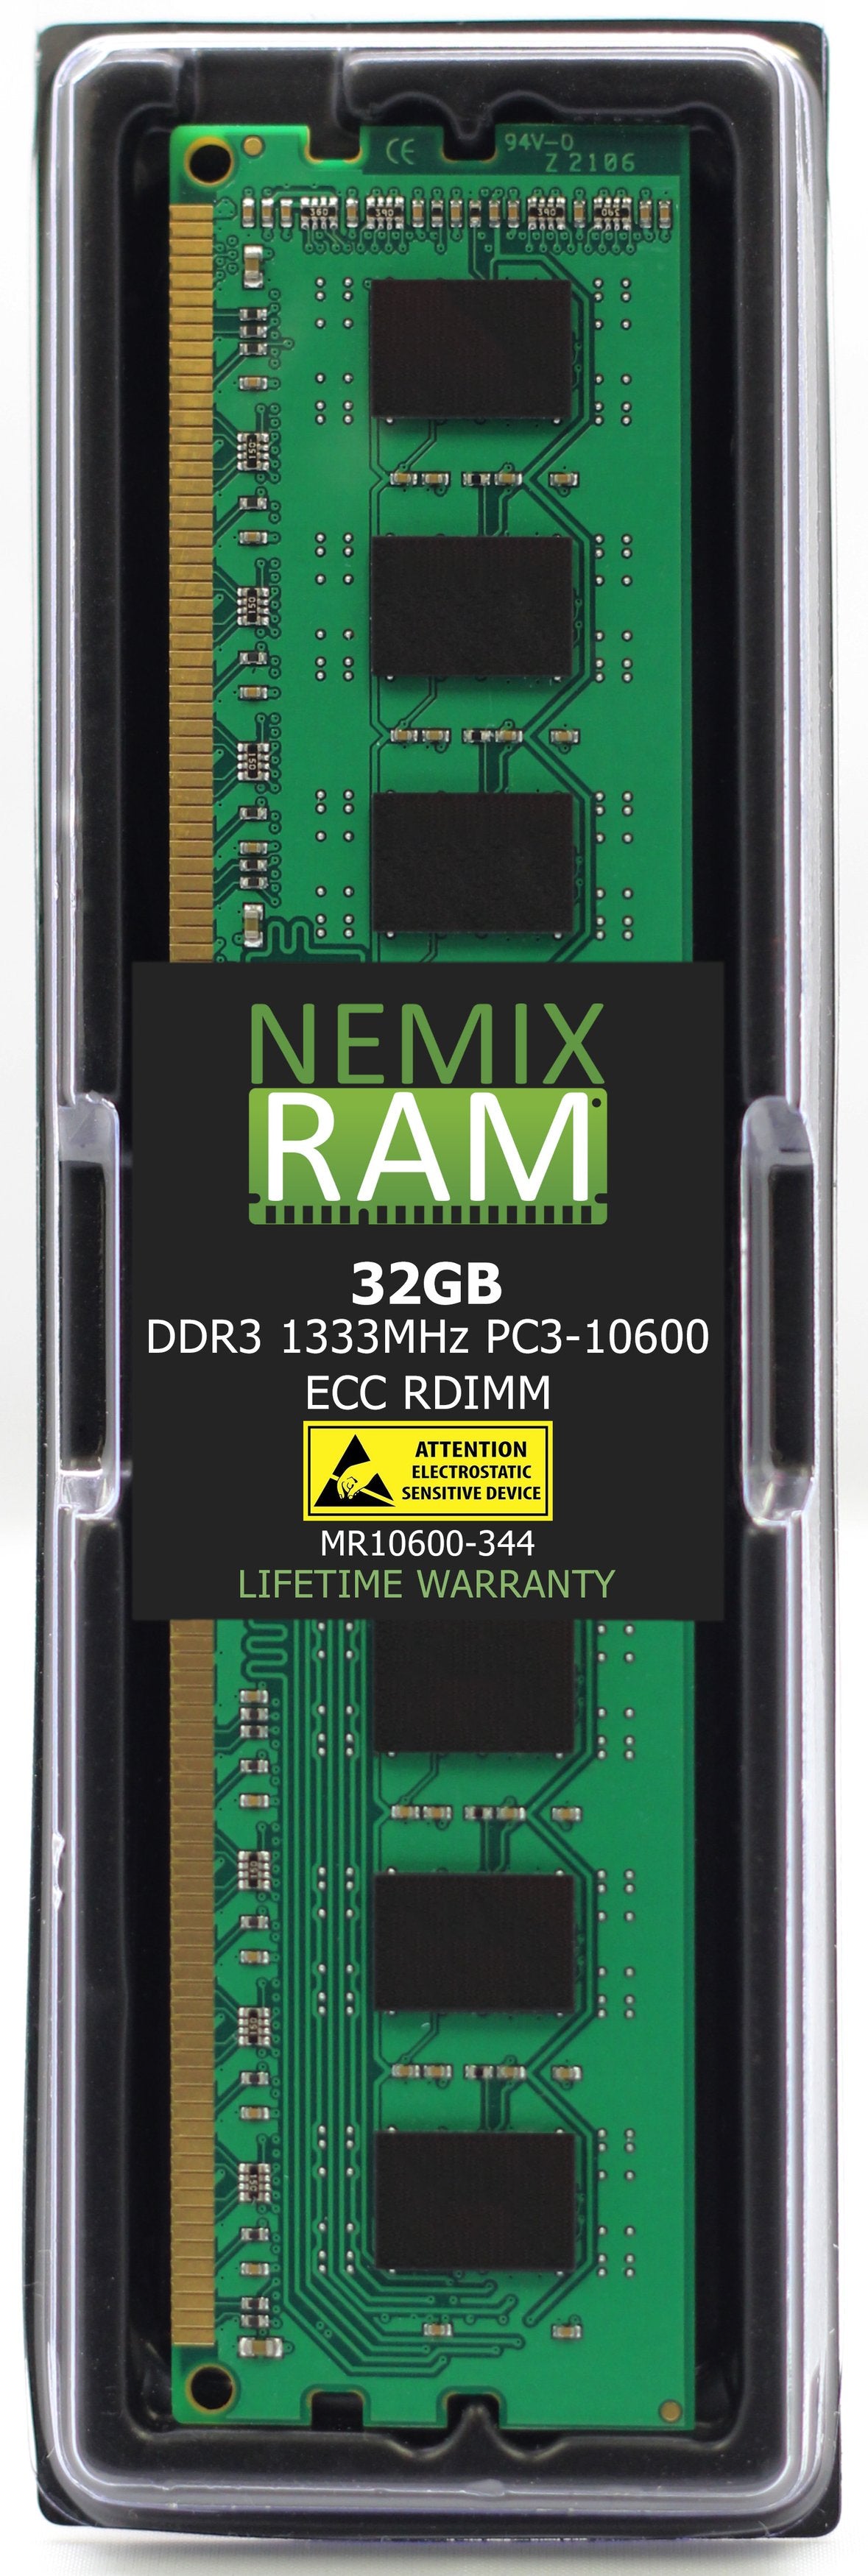 Hynix HMT84GR7BMR4C-H9 32GB DDR3 1333MHZ PC3-10600 RDIMM Compatible Memory Module